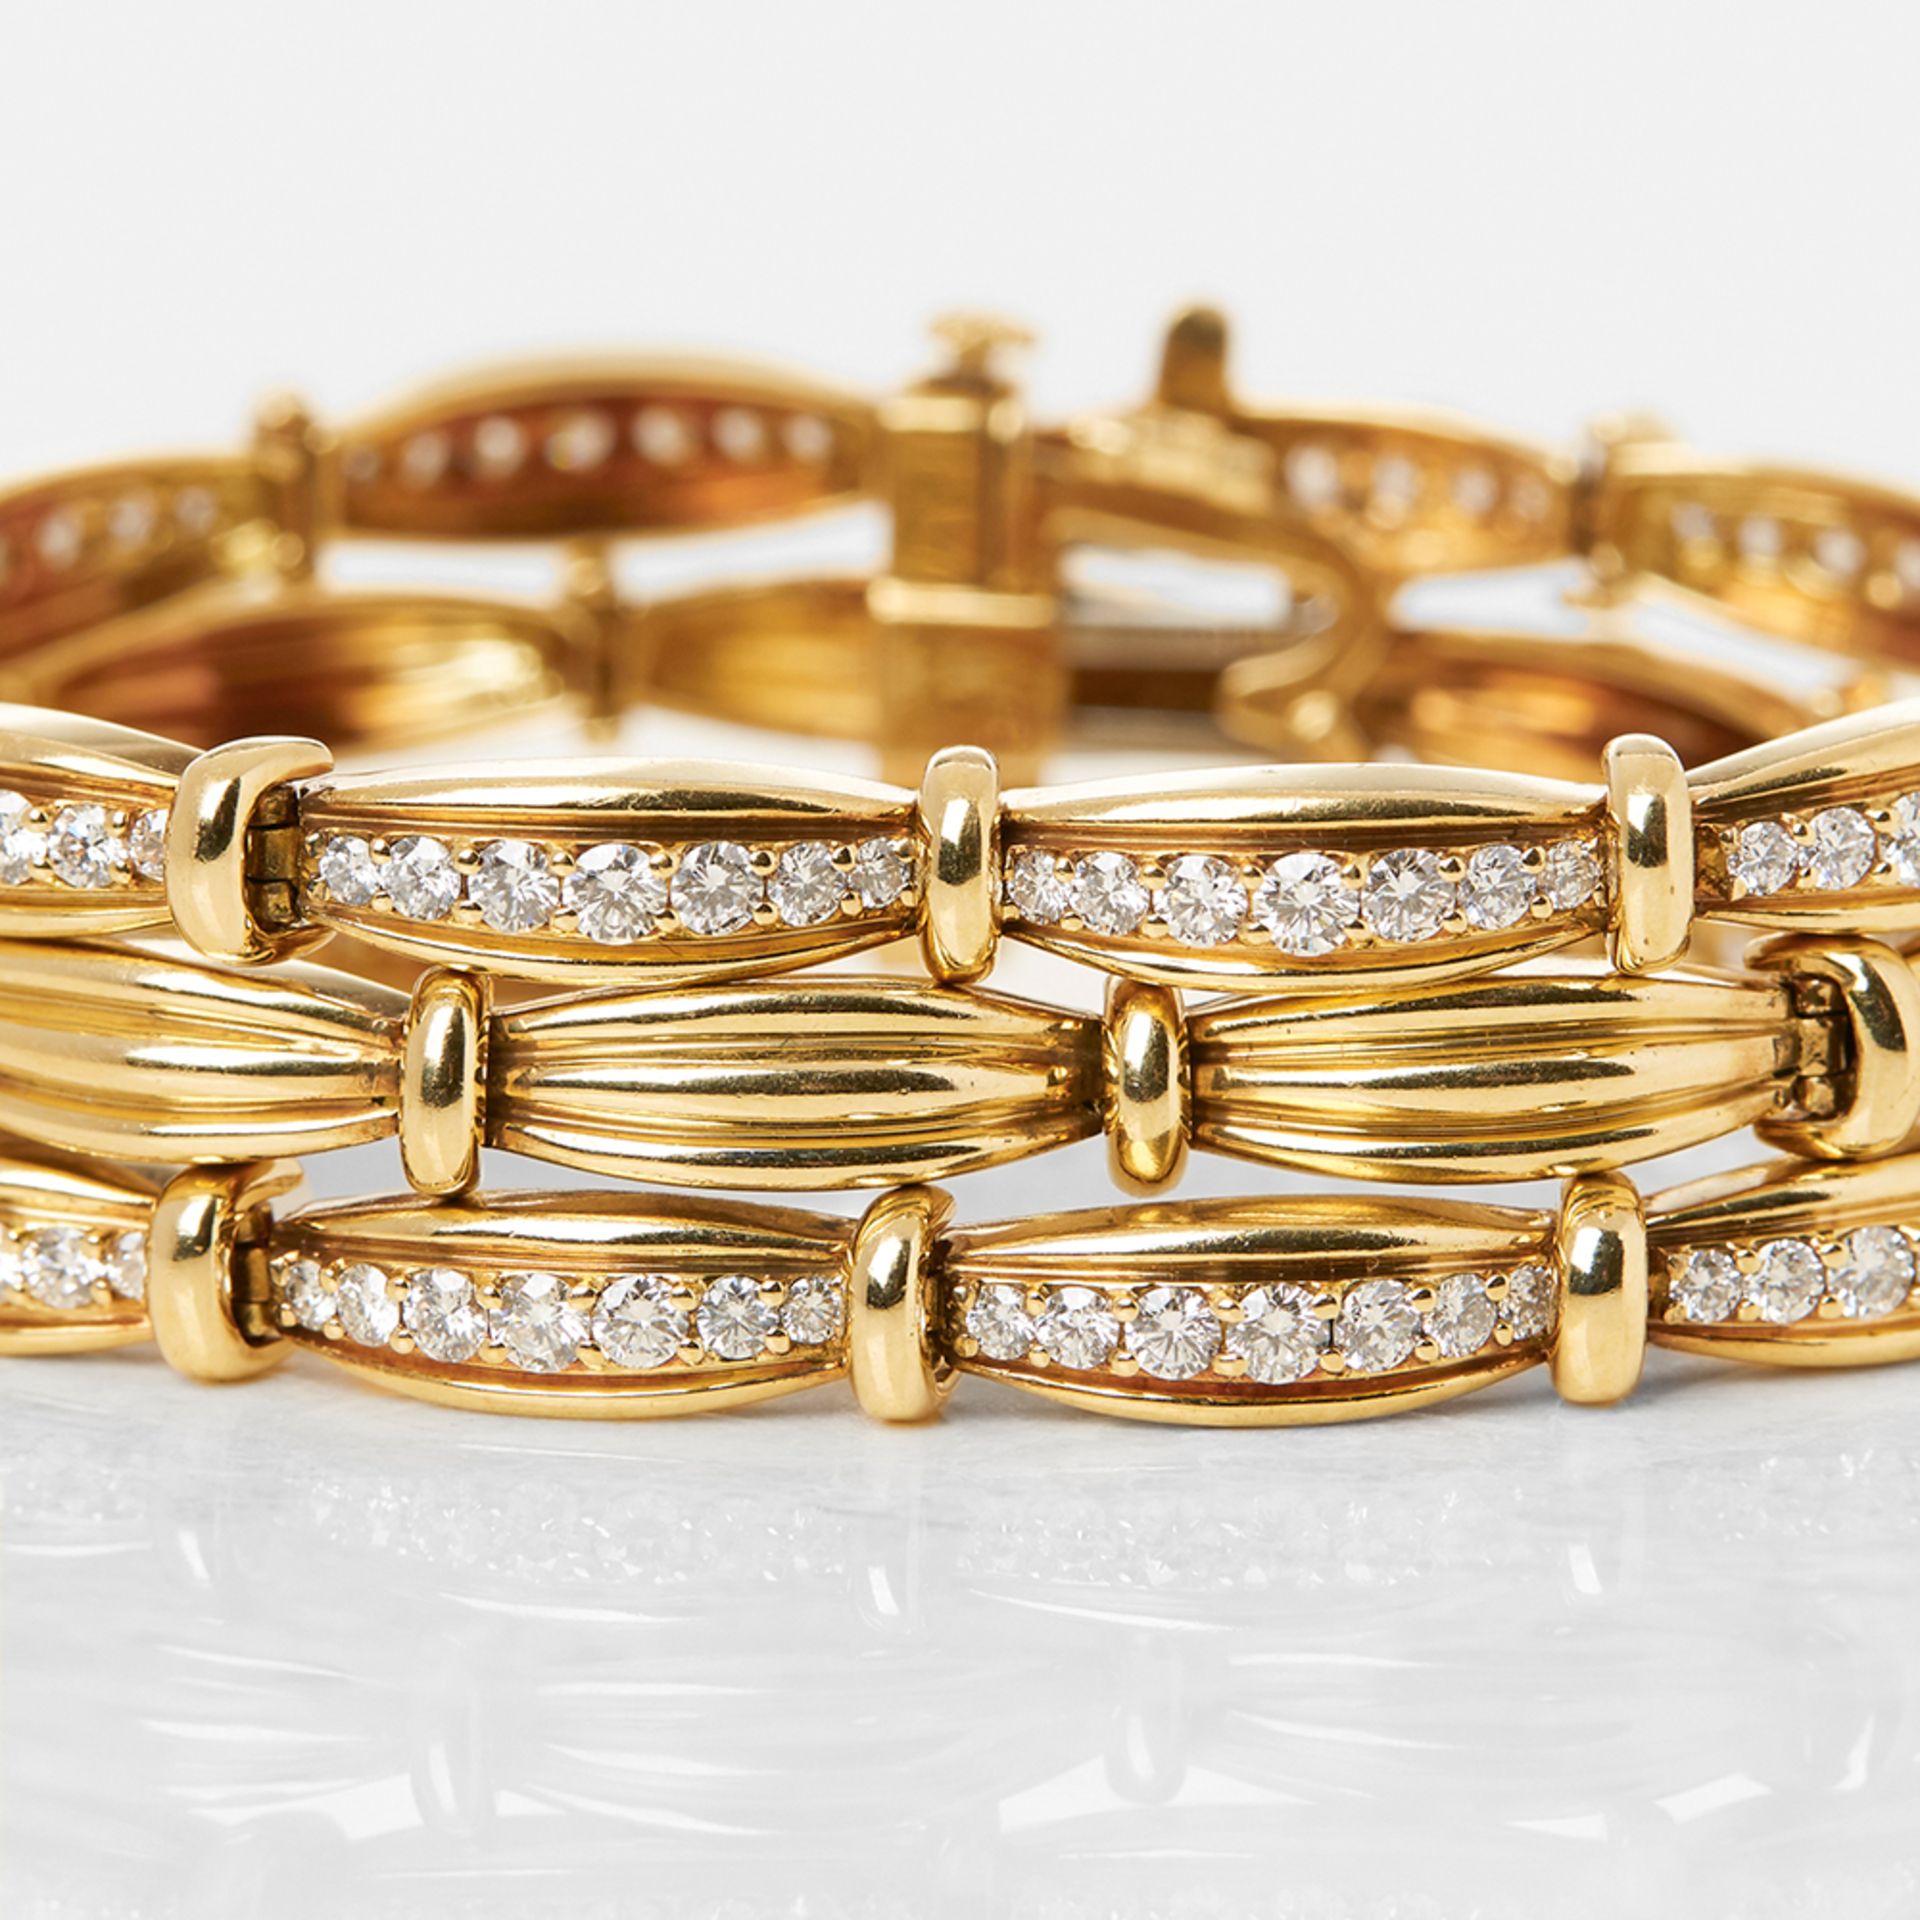 Tiffany & Co. 18k Yellow Gold Diamond Three Strand Vintage Bracelet with Presentation Box - Image 7 of 17